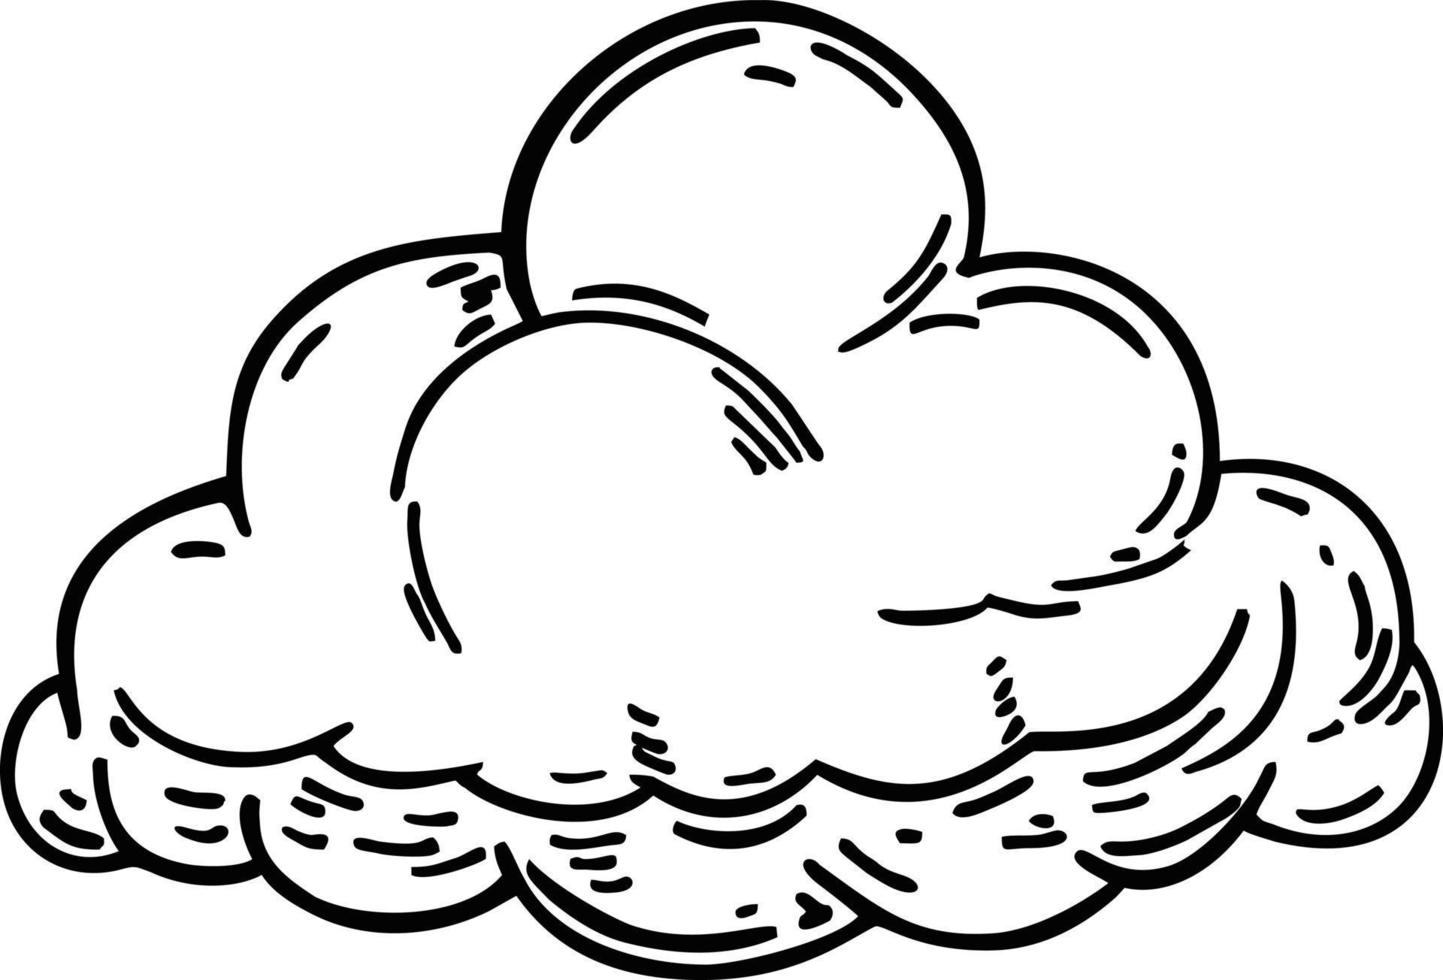 Cloud in hand drawn vintage retro style. Cartoon design element. Vector illustration